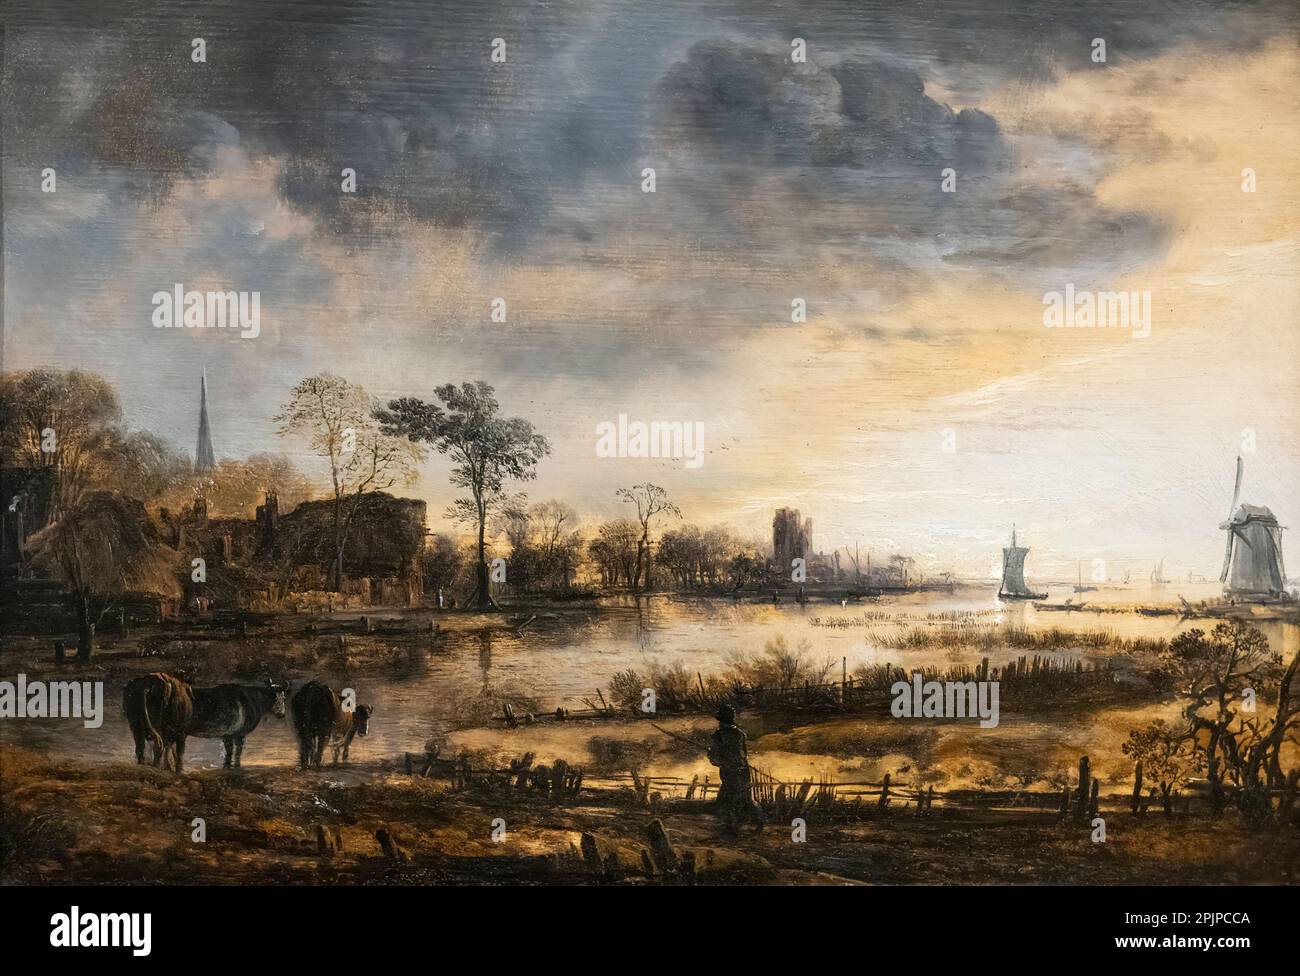 Aert van der Neer painting, An Estuary by Moonlight c 1645-58; 17th century Dutch Golden Age landscape painter, 1600s. Stock Photo